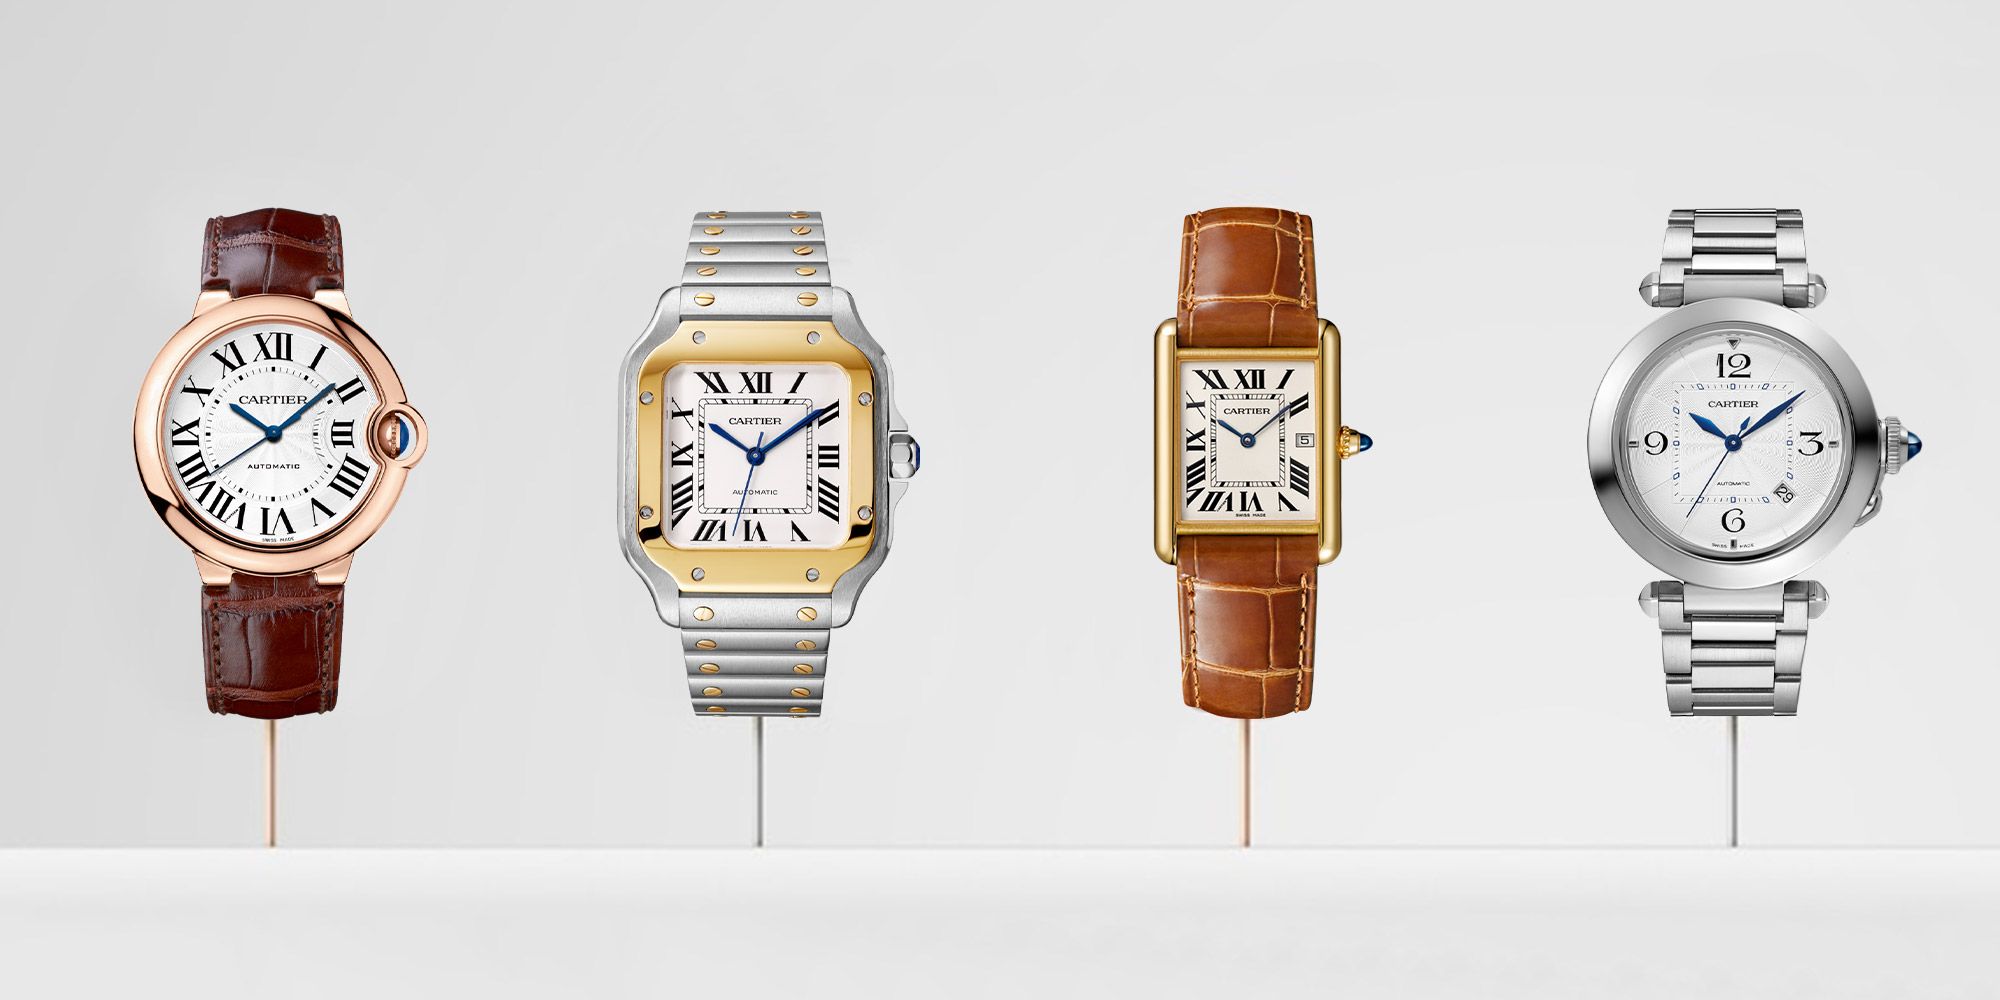 Tank Louis Cartier Watch - Watches of Switzerland